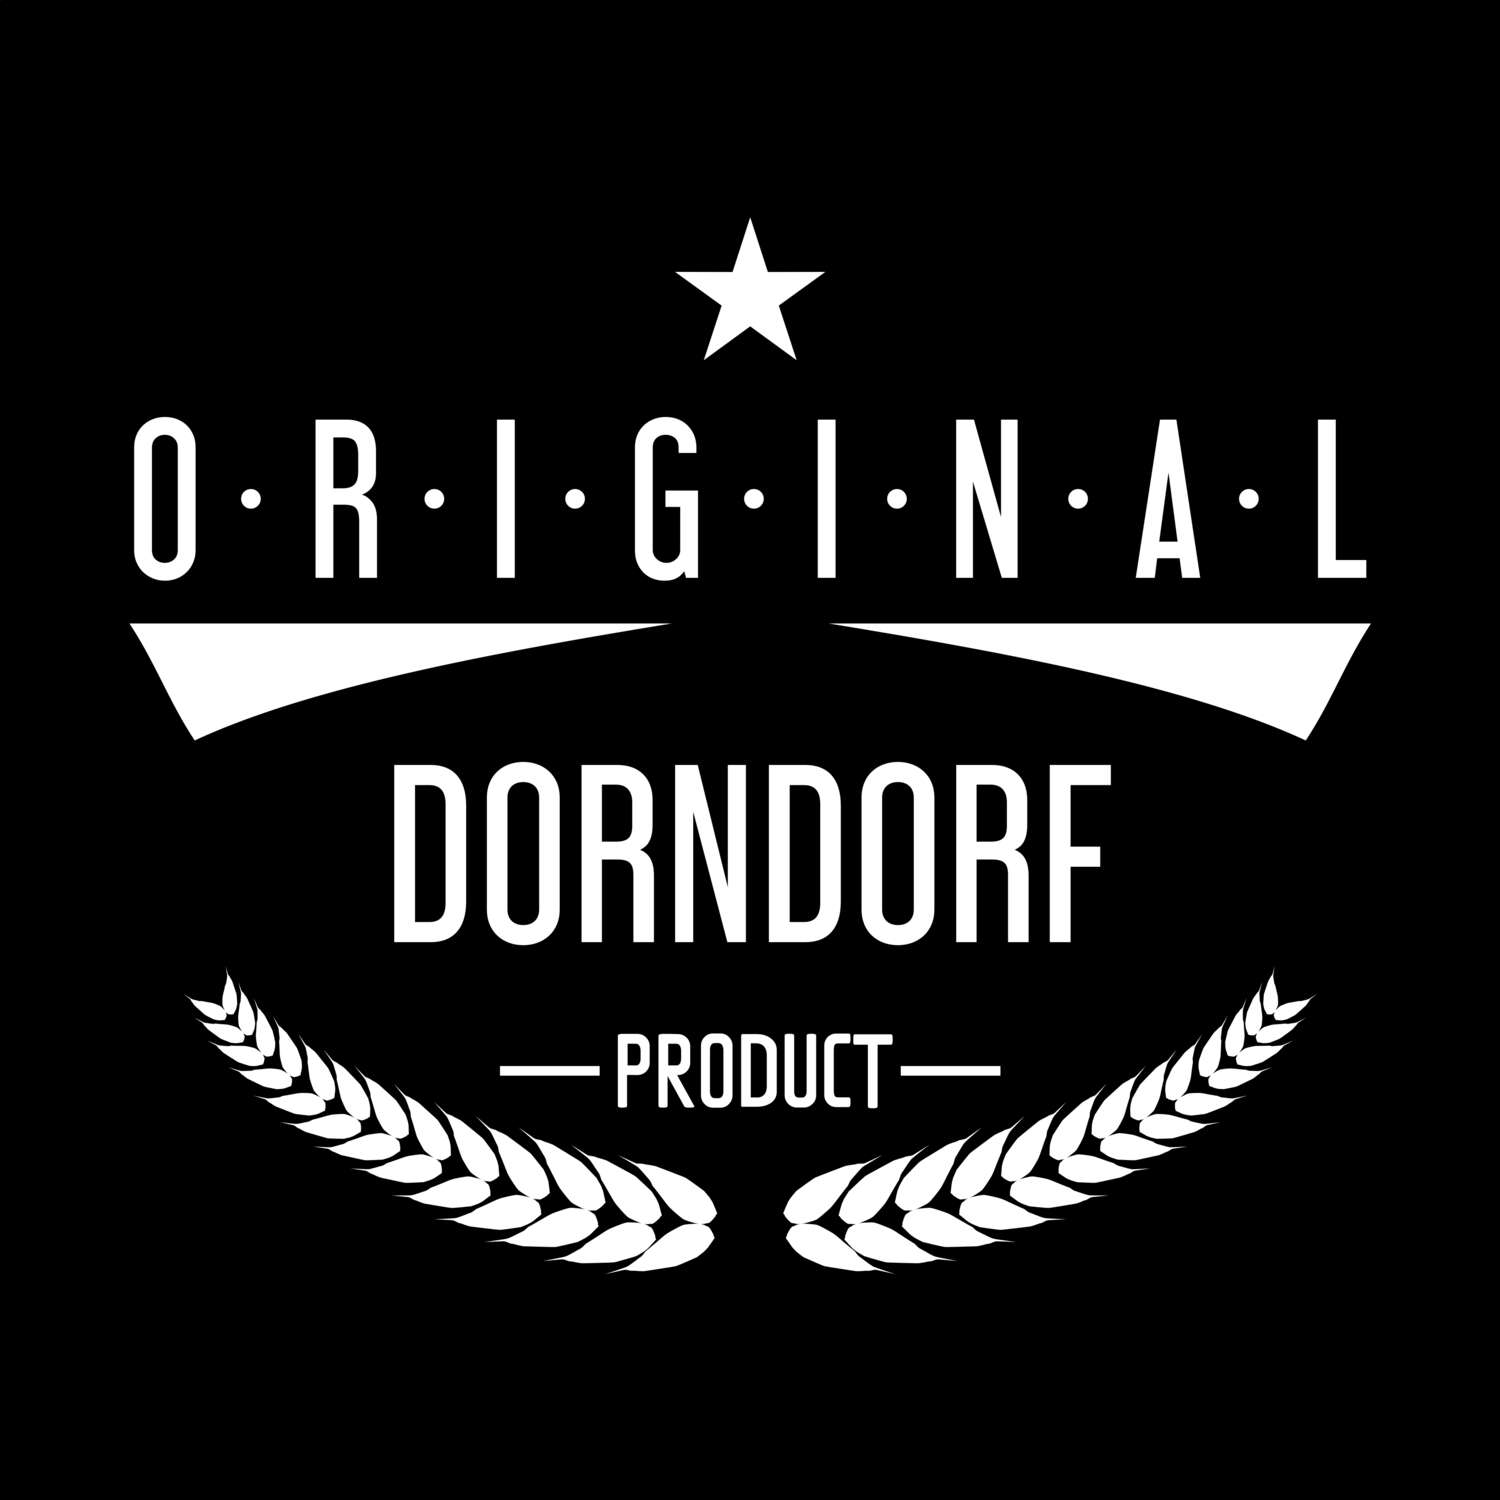 Dorndorf T-Shirt »Original Product«